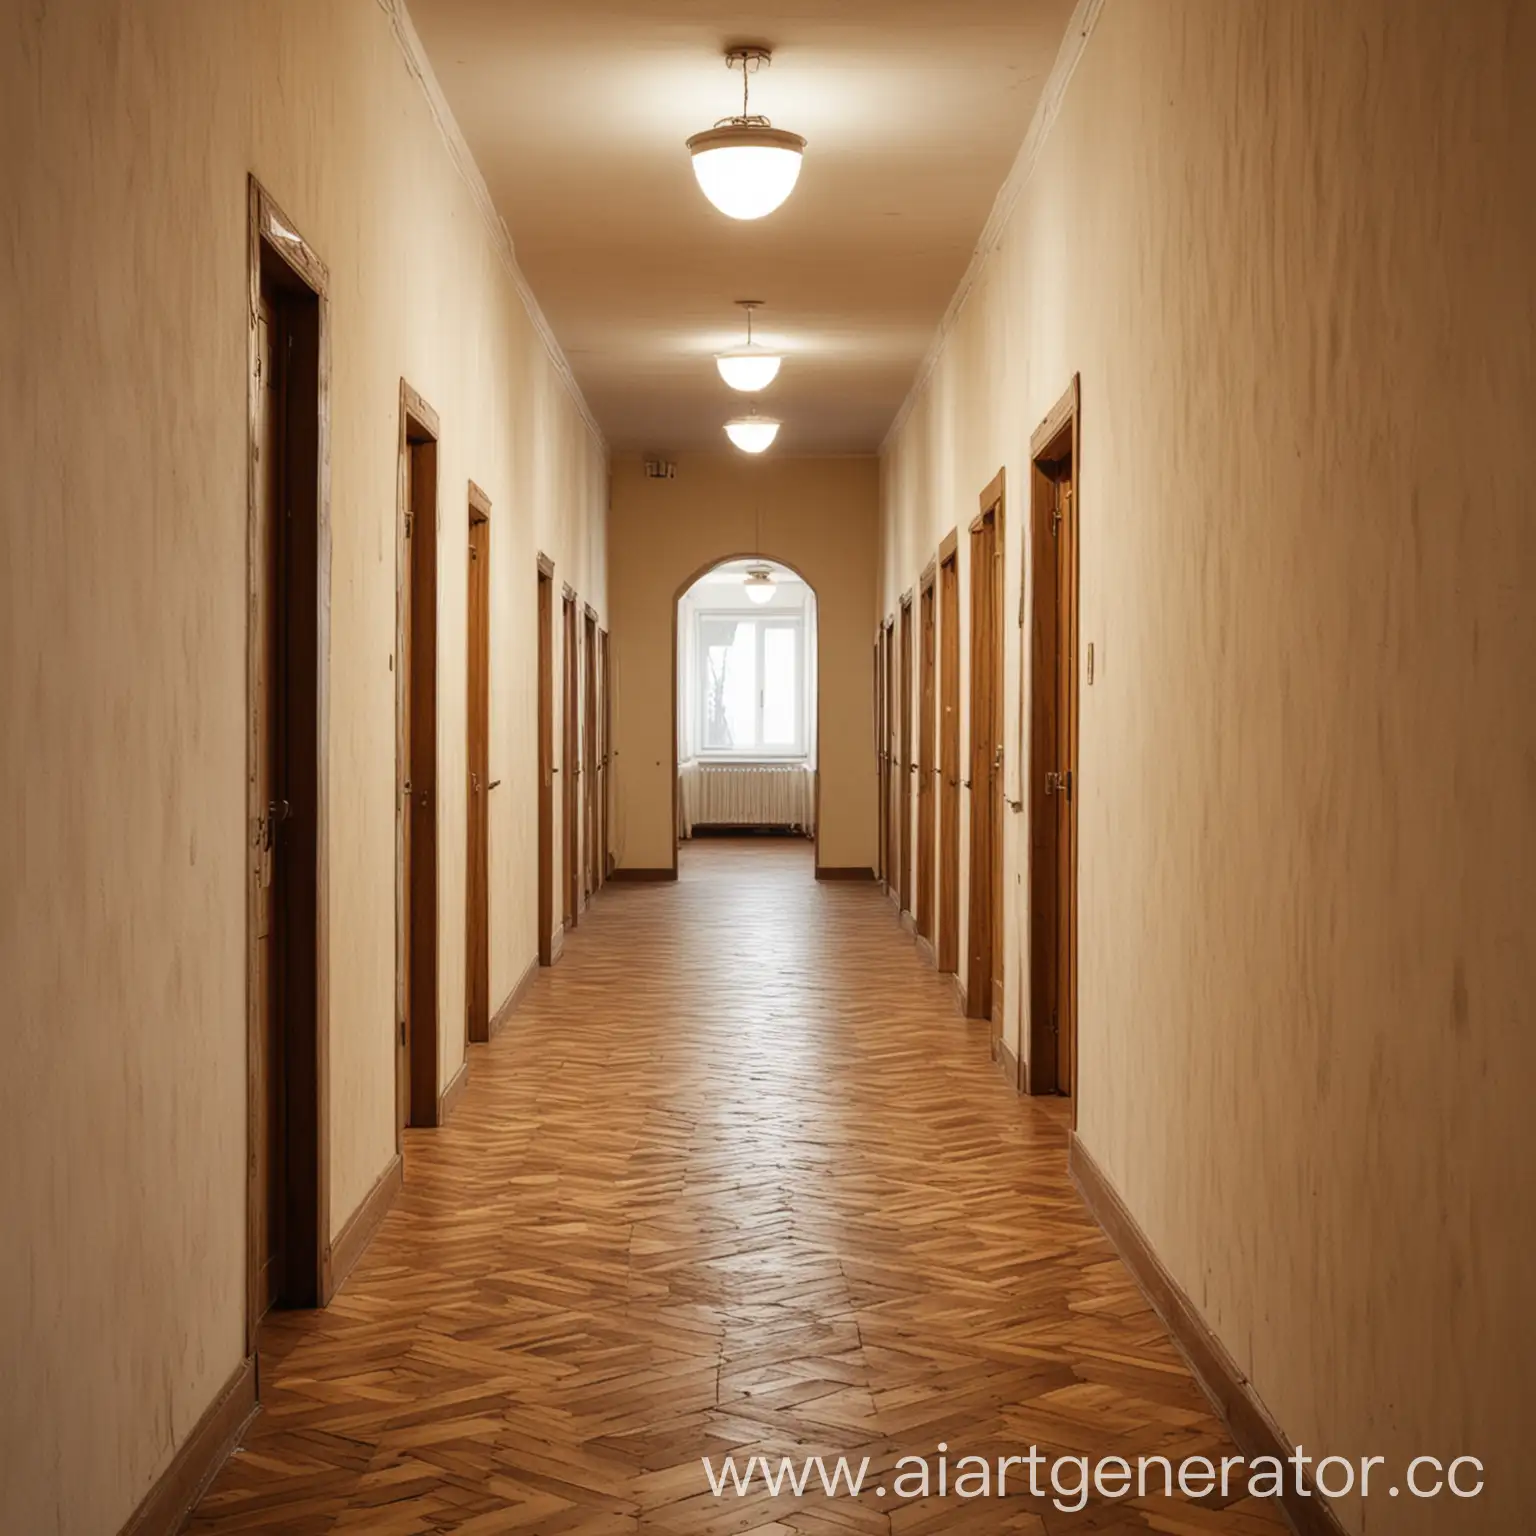 Soviet-Style-Corridor-in-Dormitory-with-Warm-Lighting